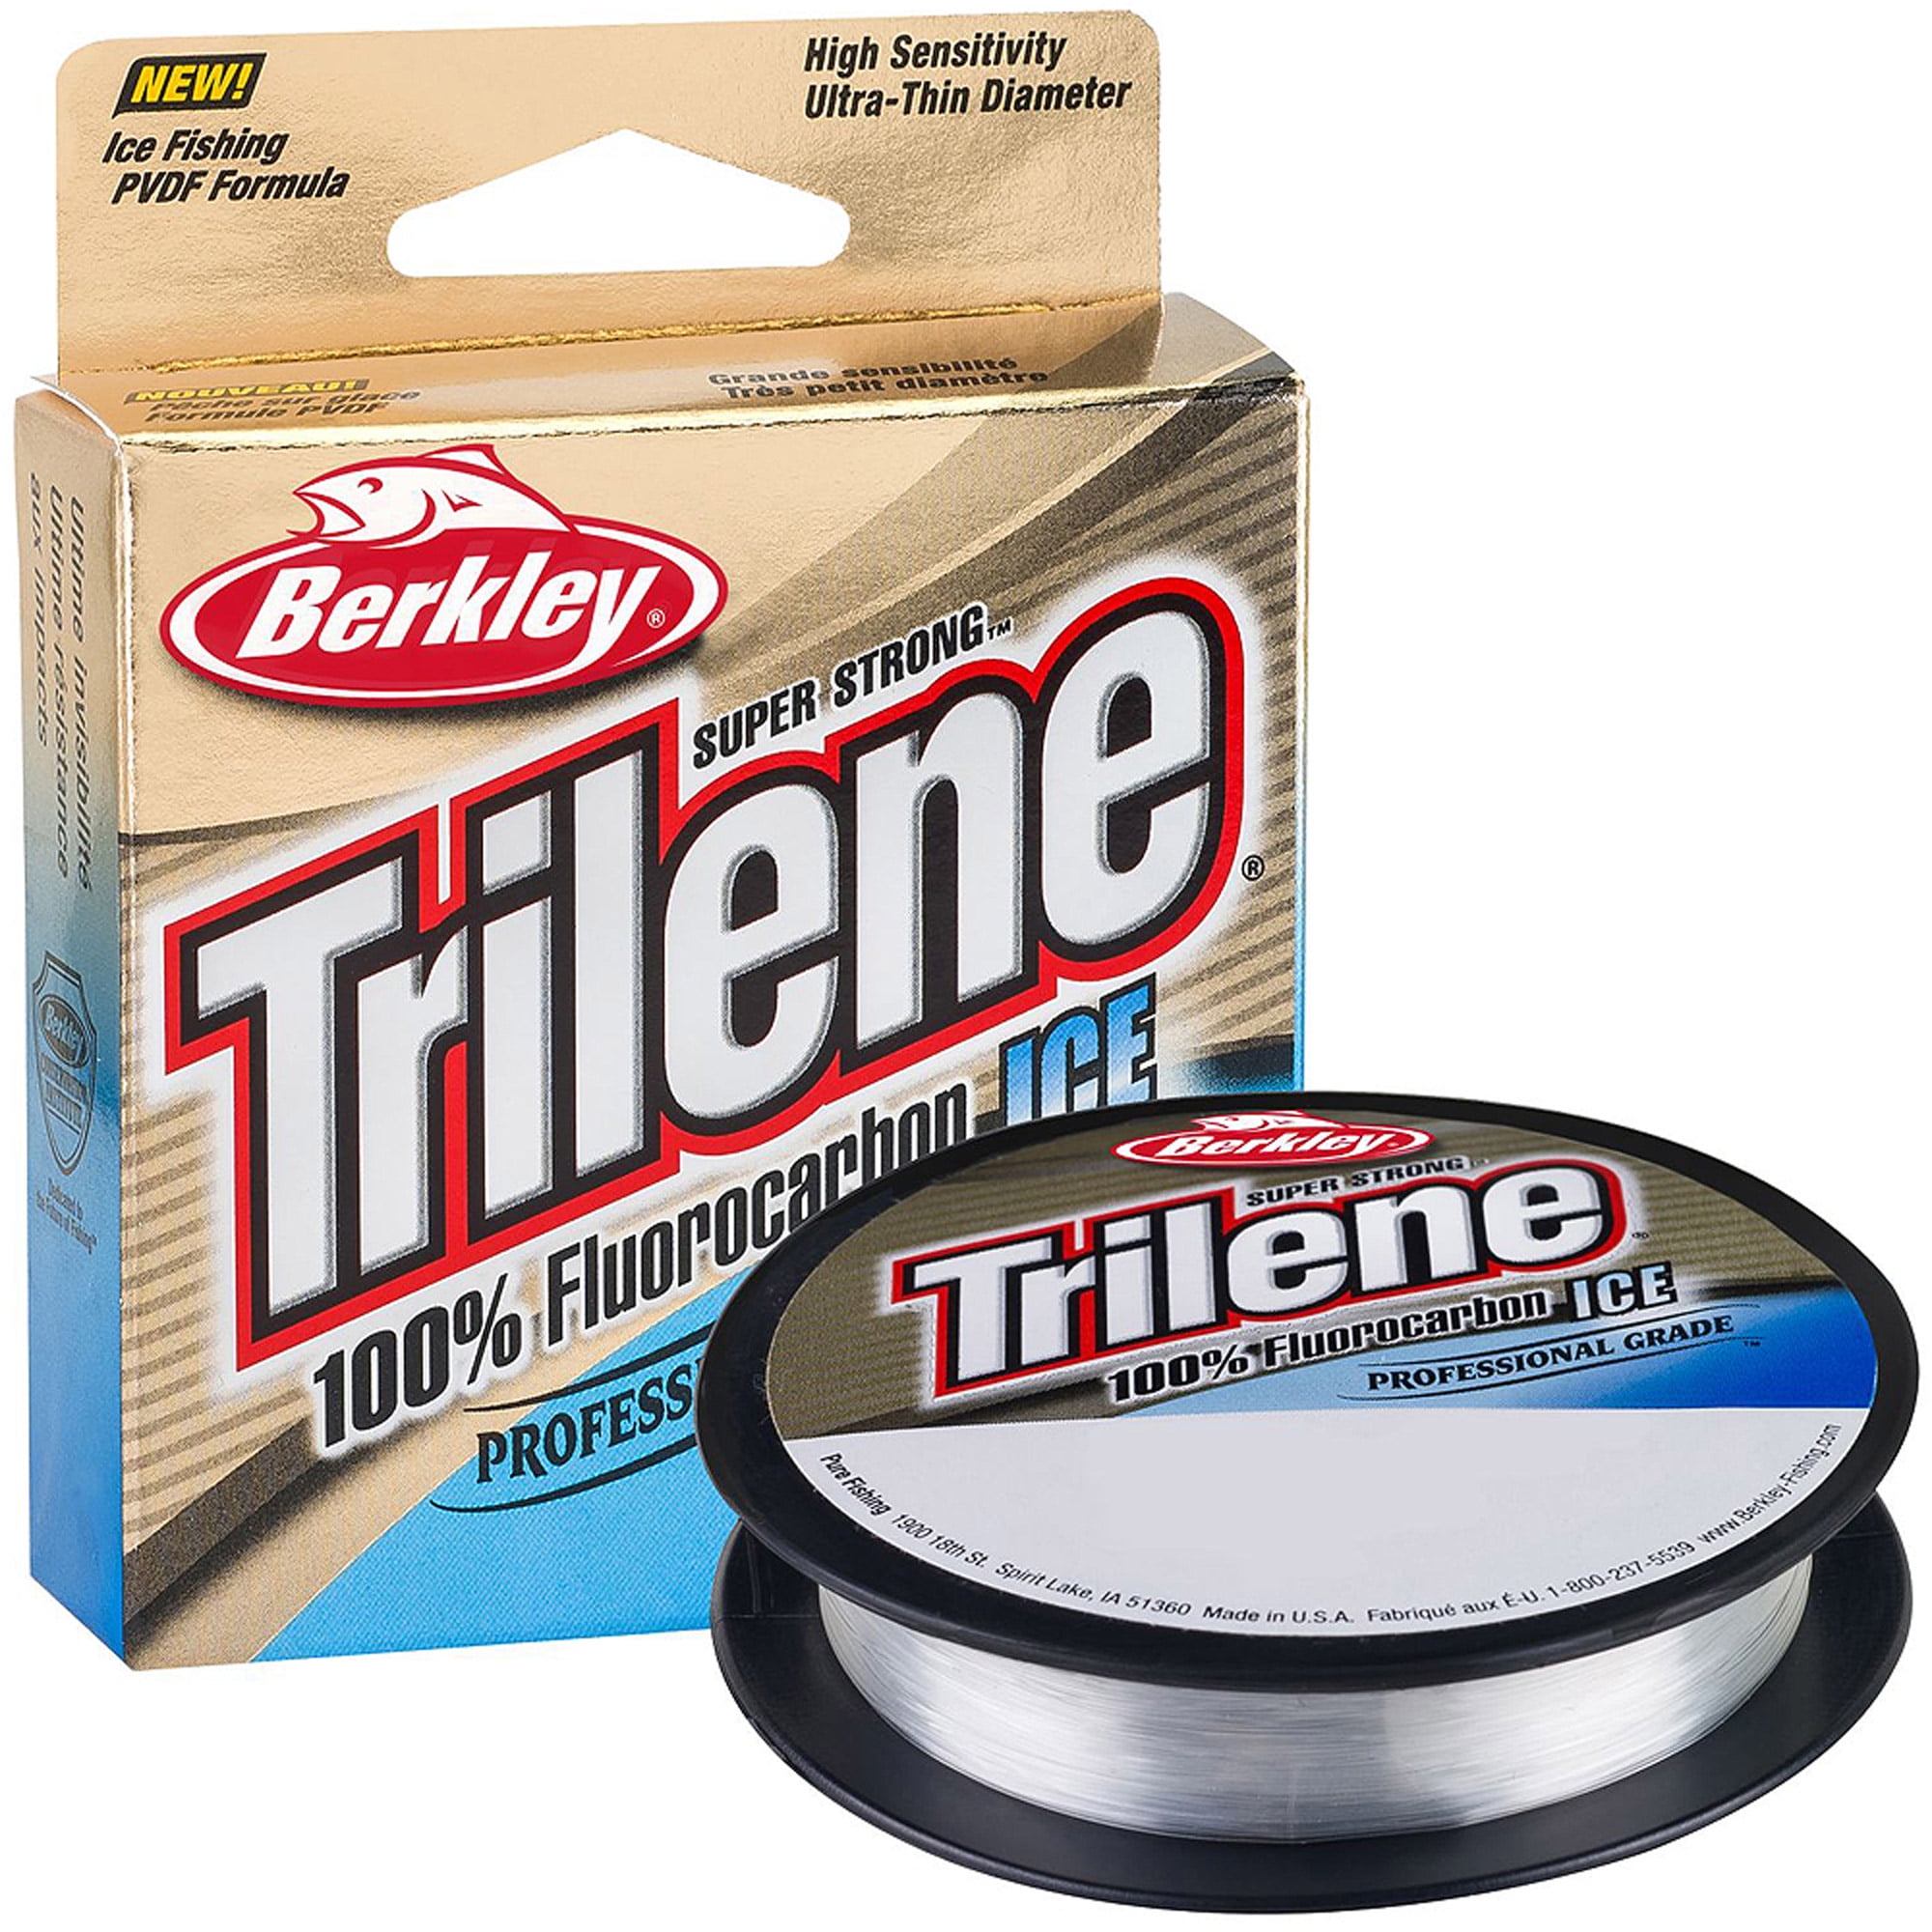 Berkley Trilene 100% Fluorocarbon Ice, Clear, 4-Pound Fishing Line 